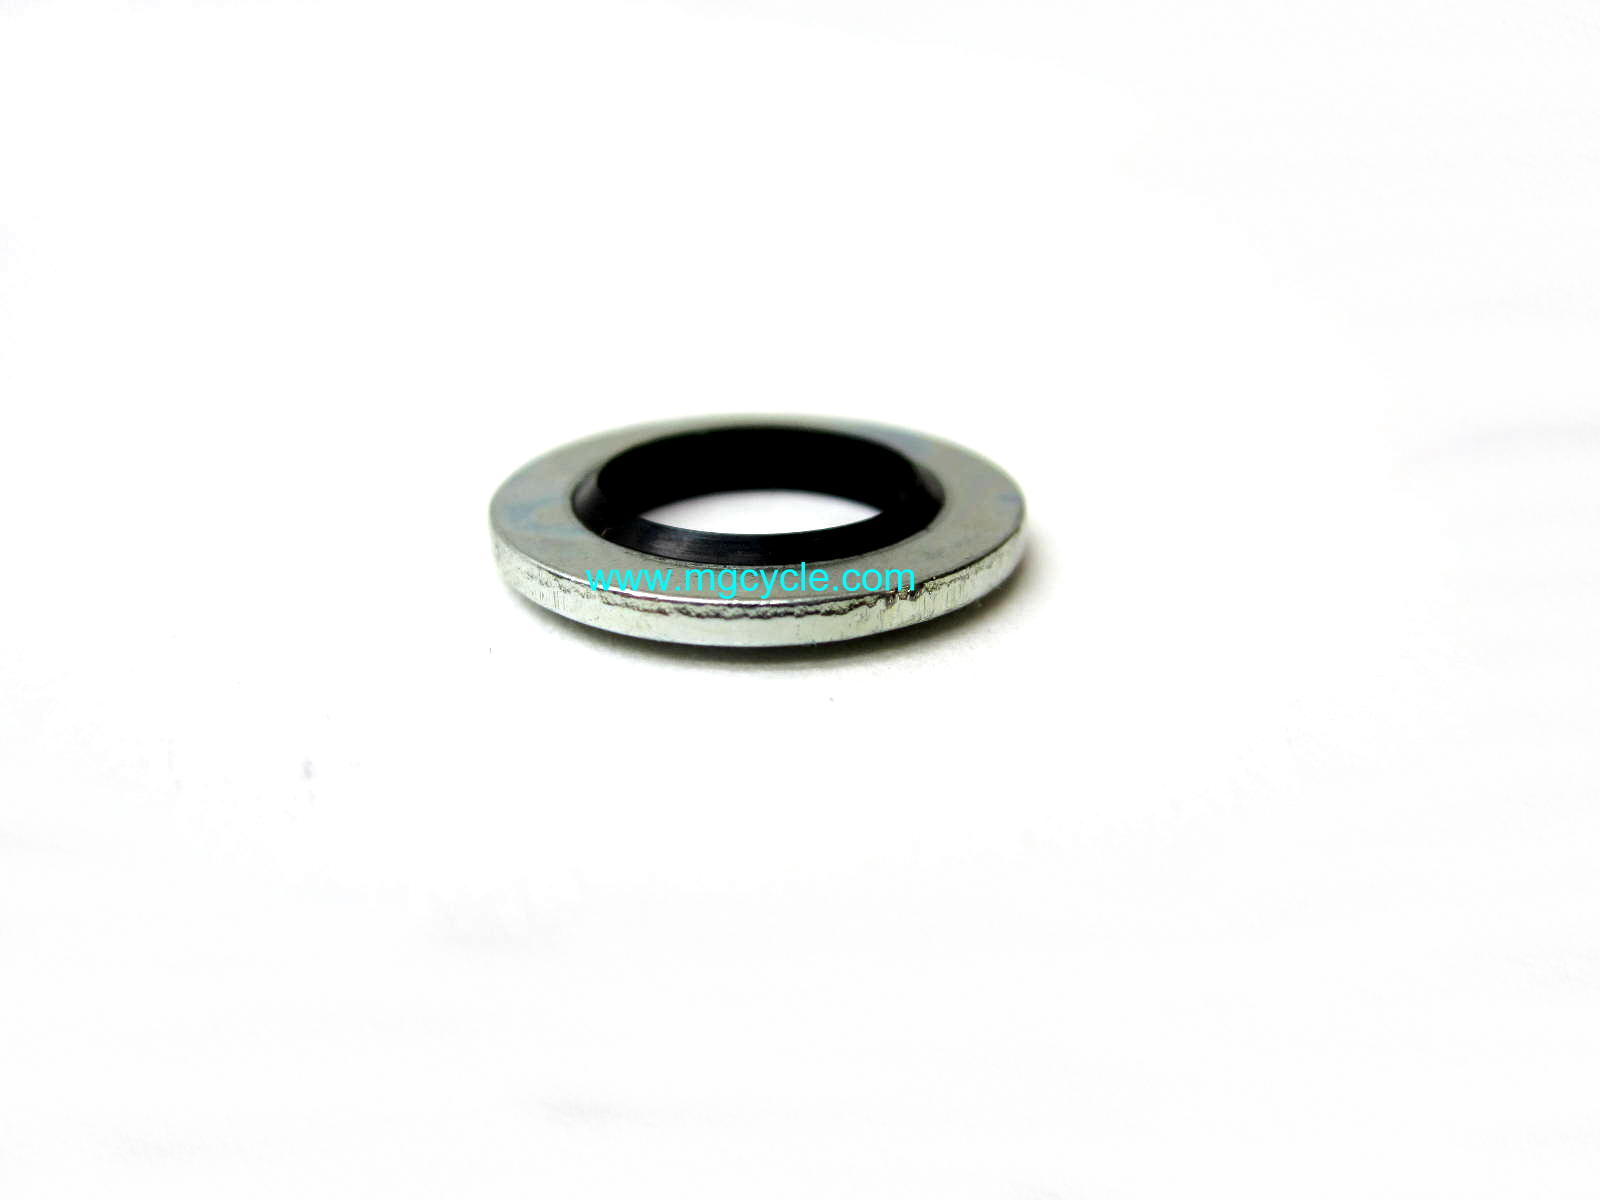 10mm sealing washer with rubber ring 1999 onward GU01528930